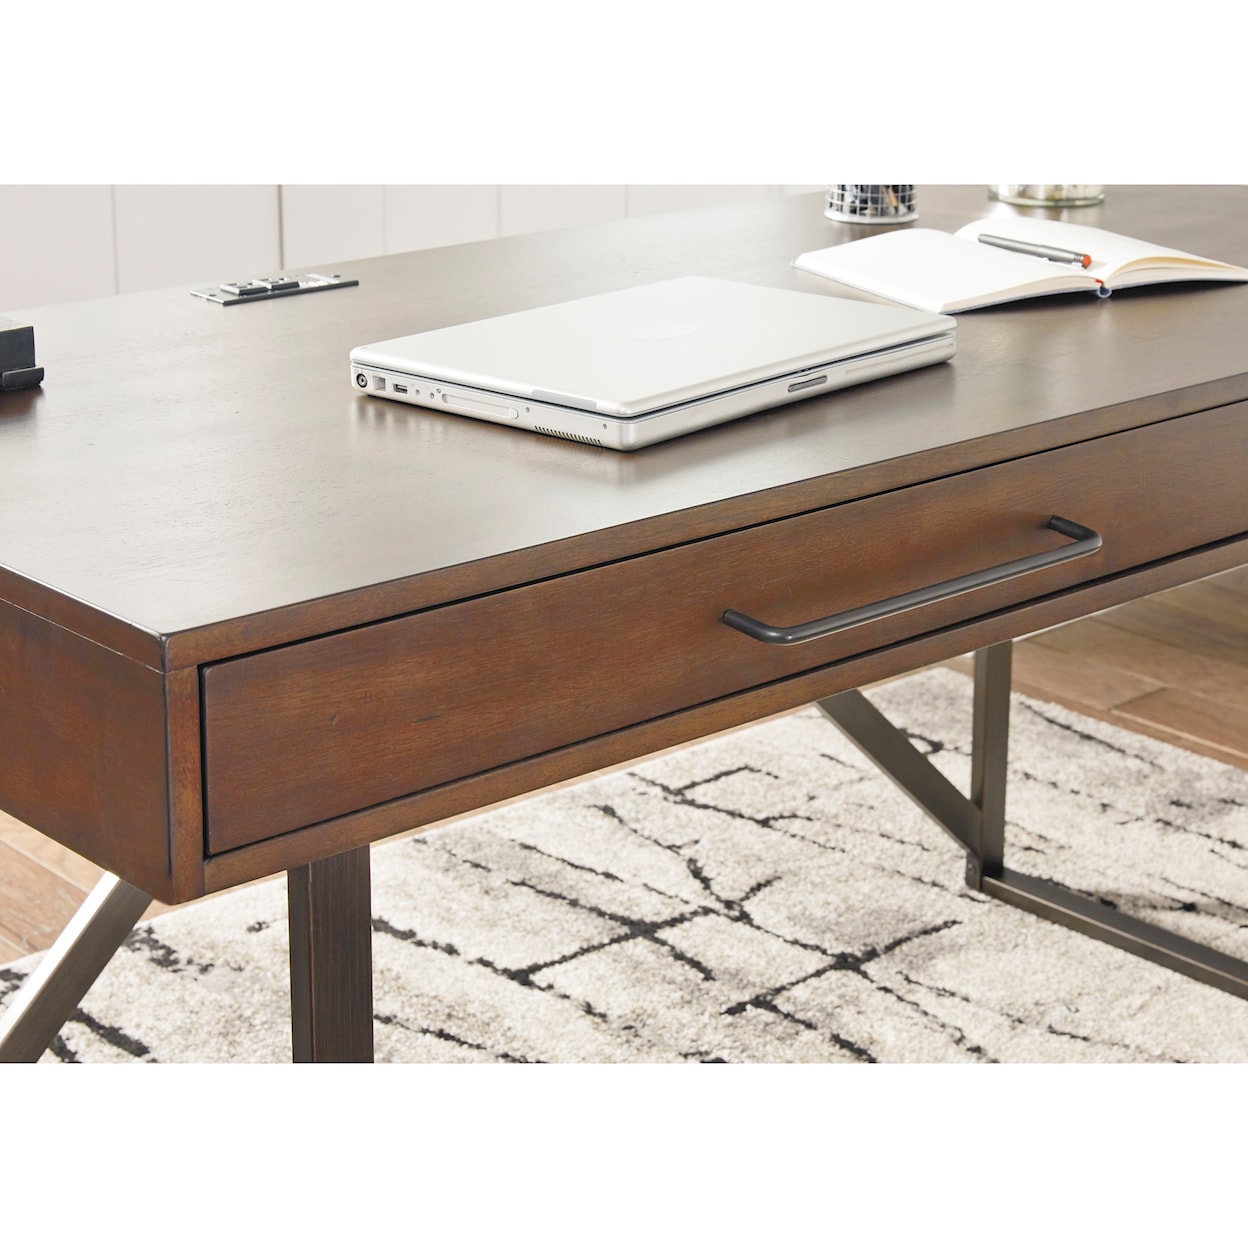 Belfort Select Starmore Home Office Desk